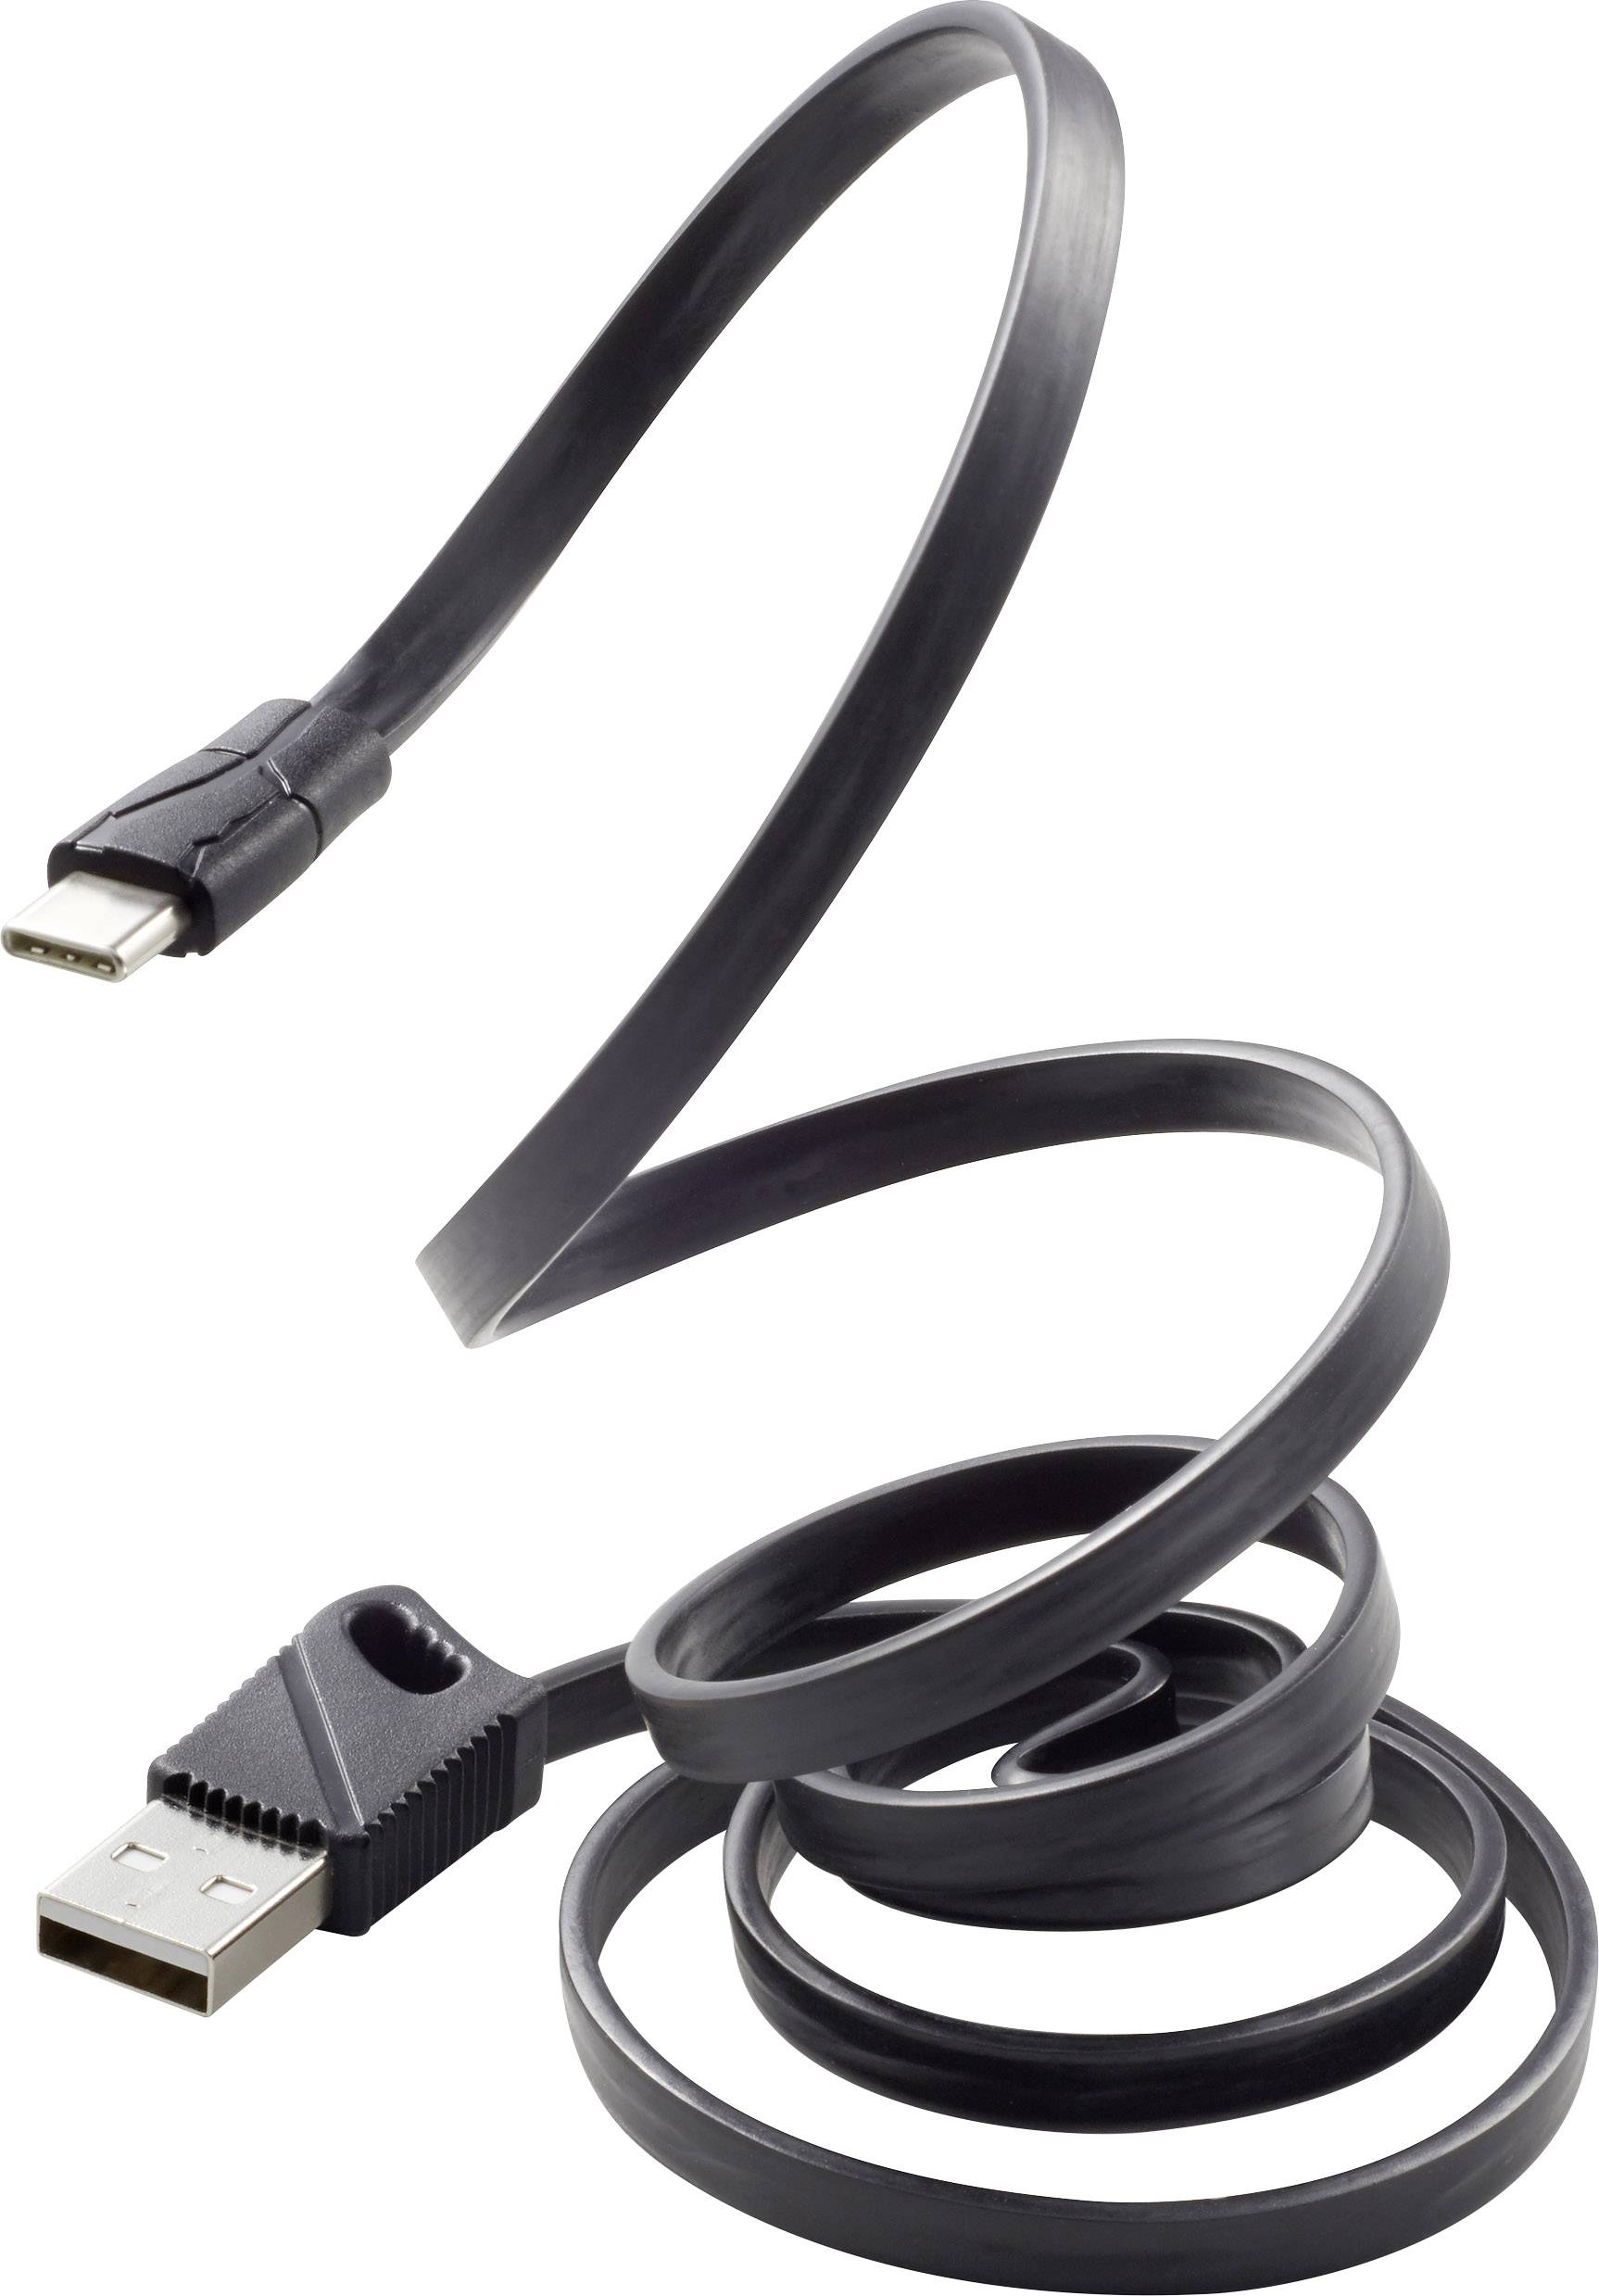 RENKFORCE USB 2.0 Anschlusskabel [1x USB 2.0 Stecker A - 1x USB-C Stecker] 1 m Schwarz